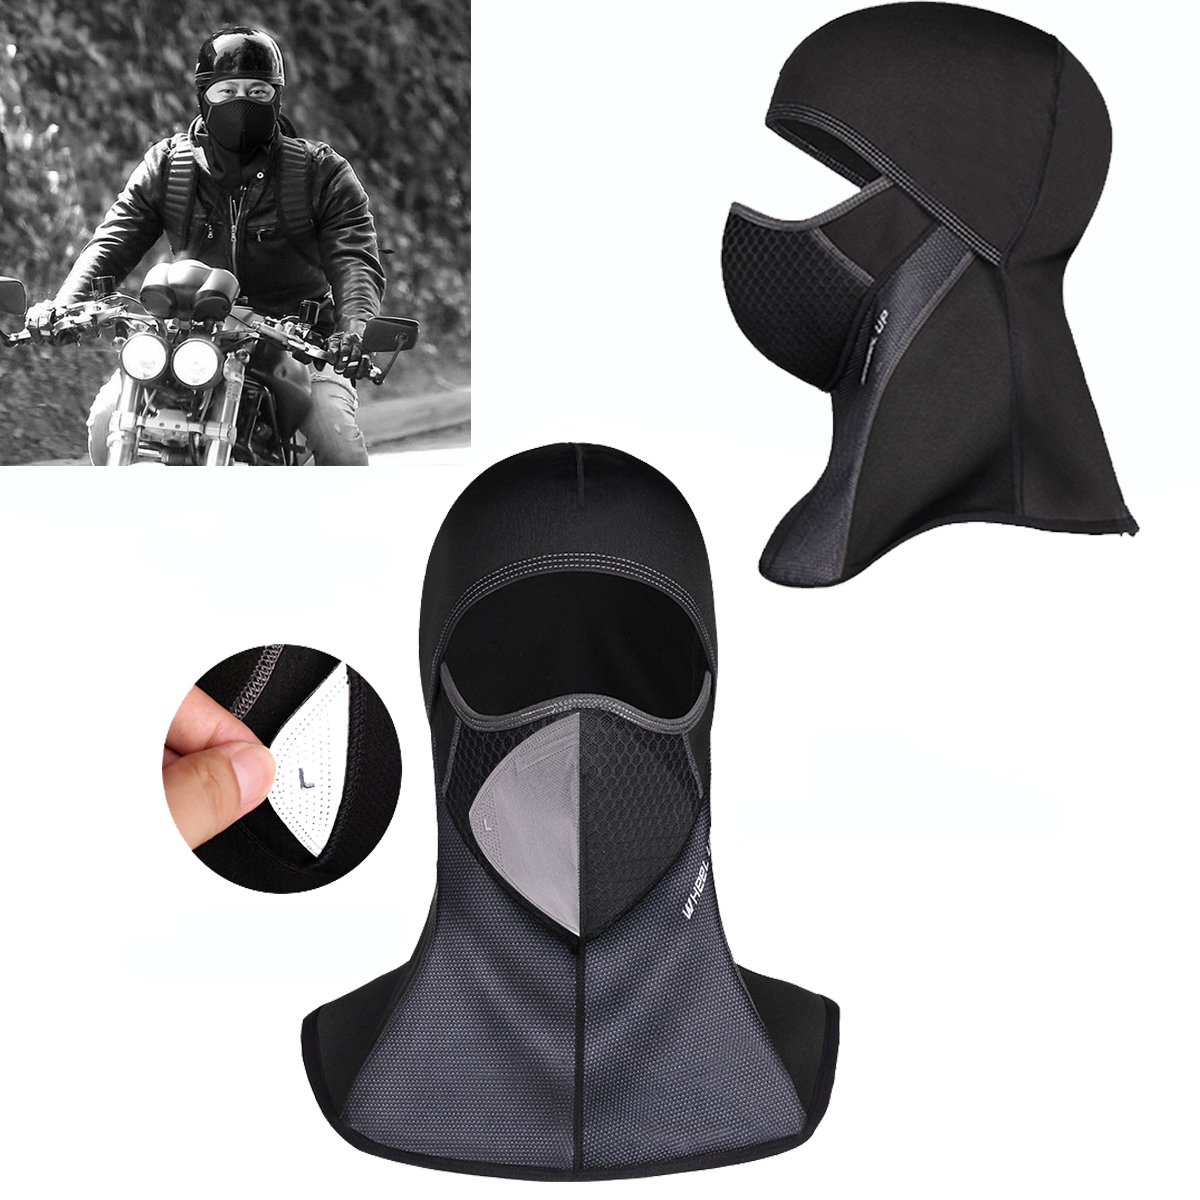 24SHOPZ Wheel up Winter Warm Ski Motorcycly Cycling Face Mask Helmet Cap Windproof Fleece Balaclava Hat